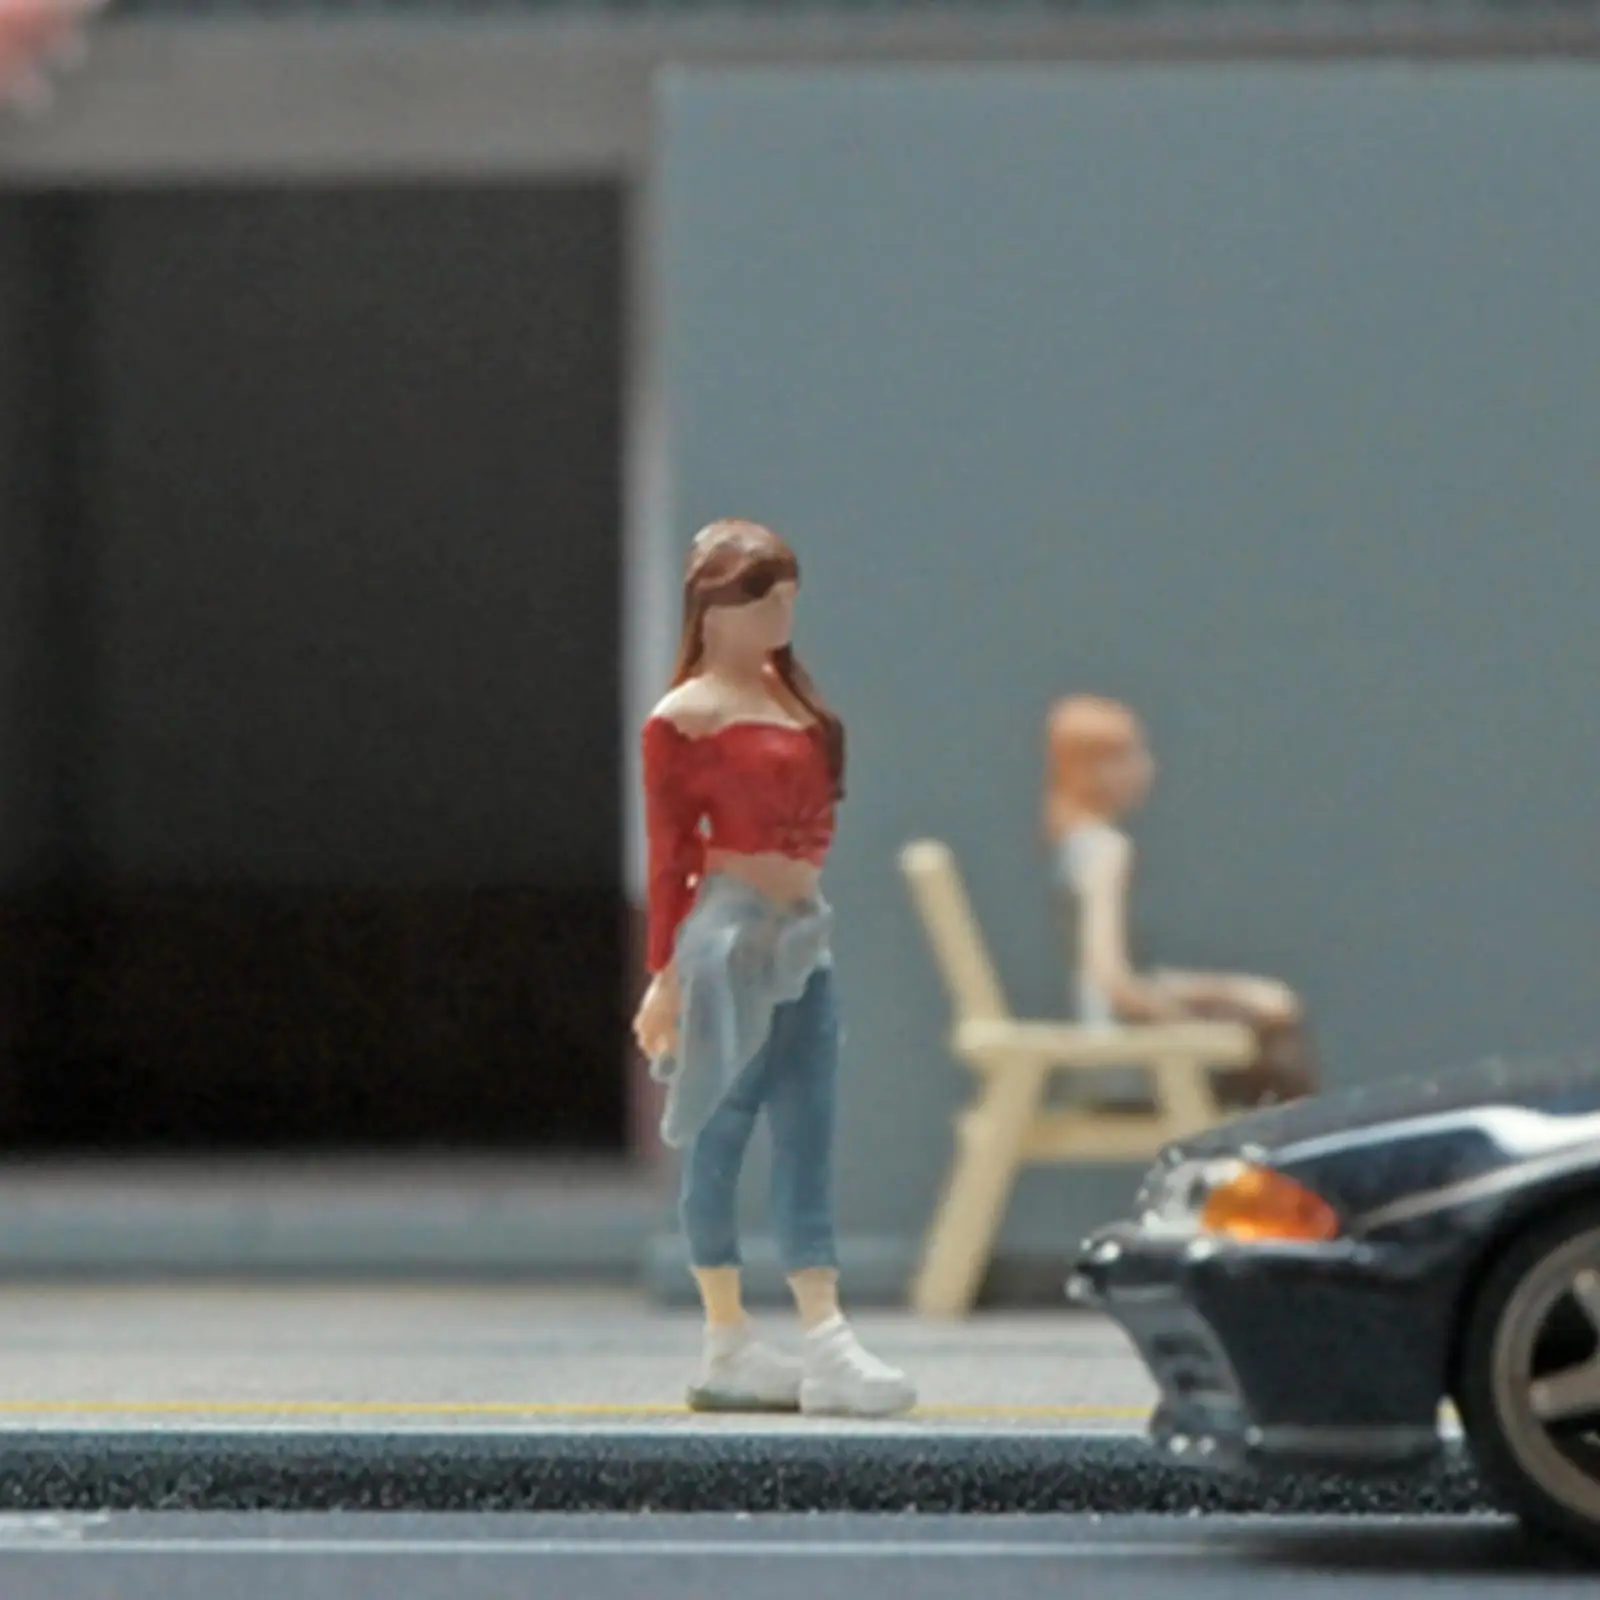 1/64 Painter Figures People Figurines for Sand Table Diorama Miniature Scene